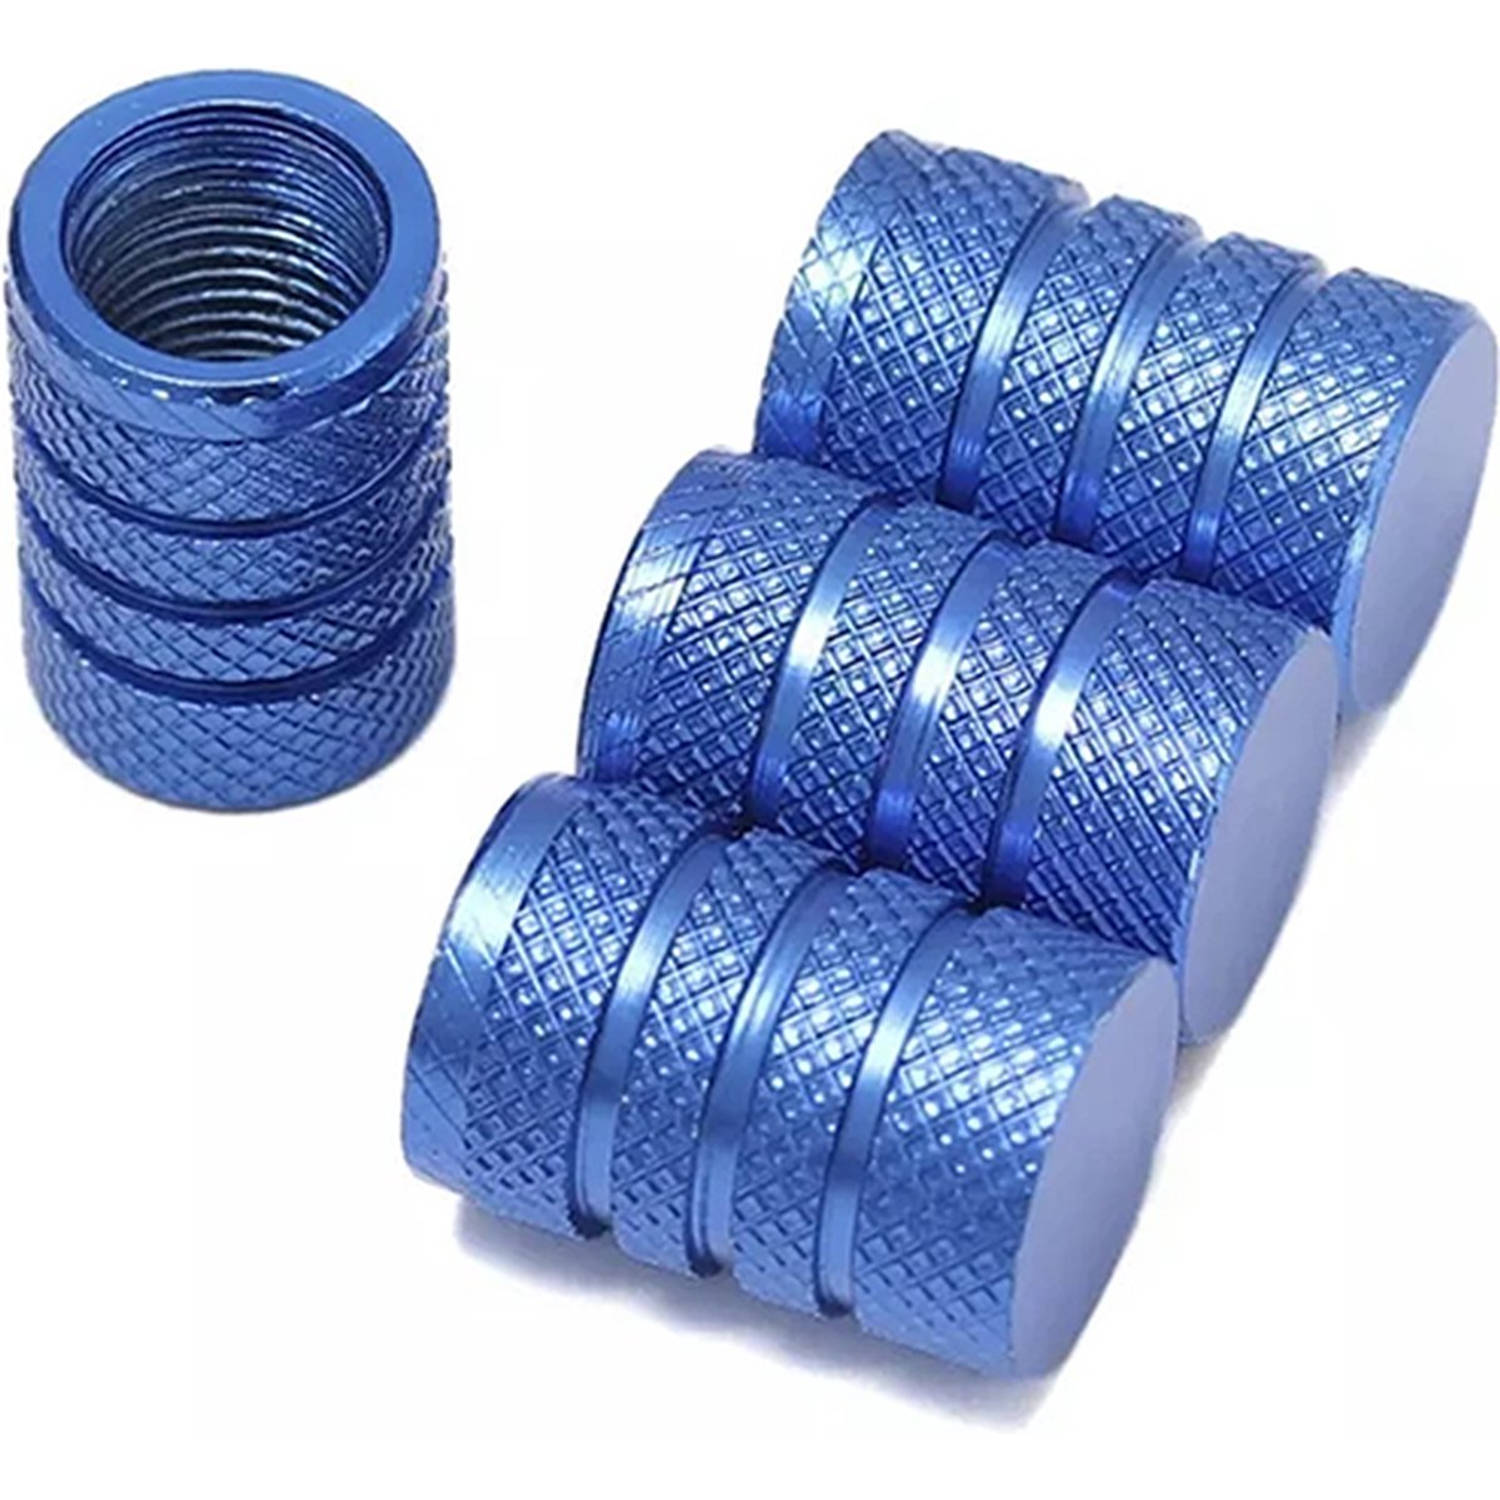 TT-products ventieldoppen 3-rings Blue aluminium 4 stuks blauw - auto ventieldop - ventieldopjes